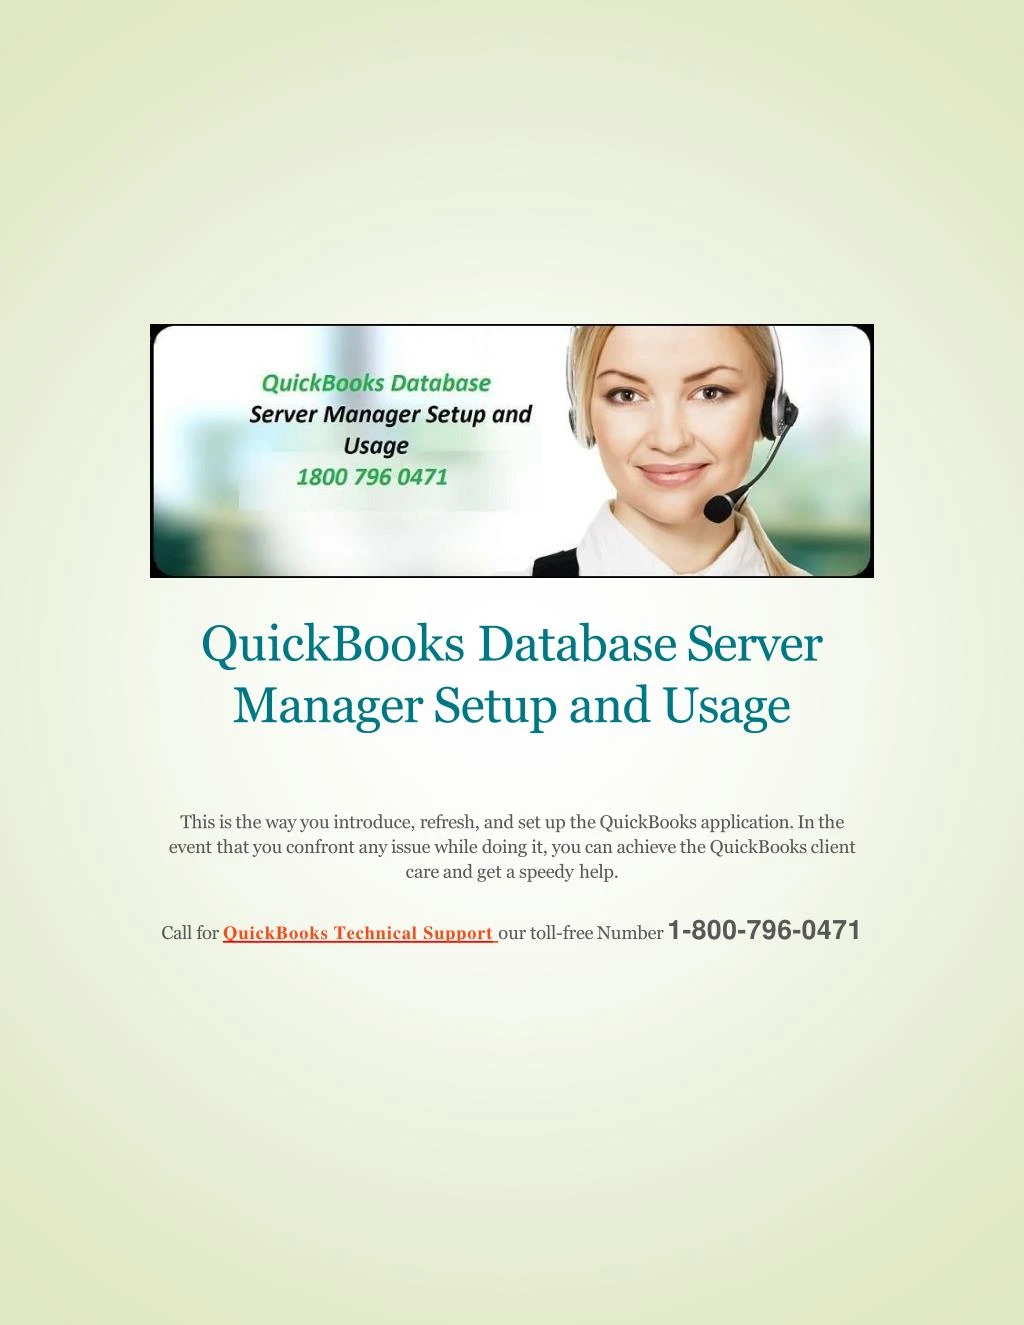 quickbooks database server manager setup and usage